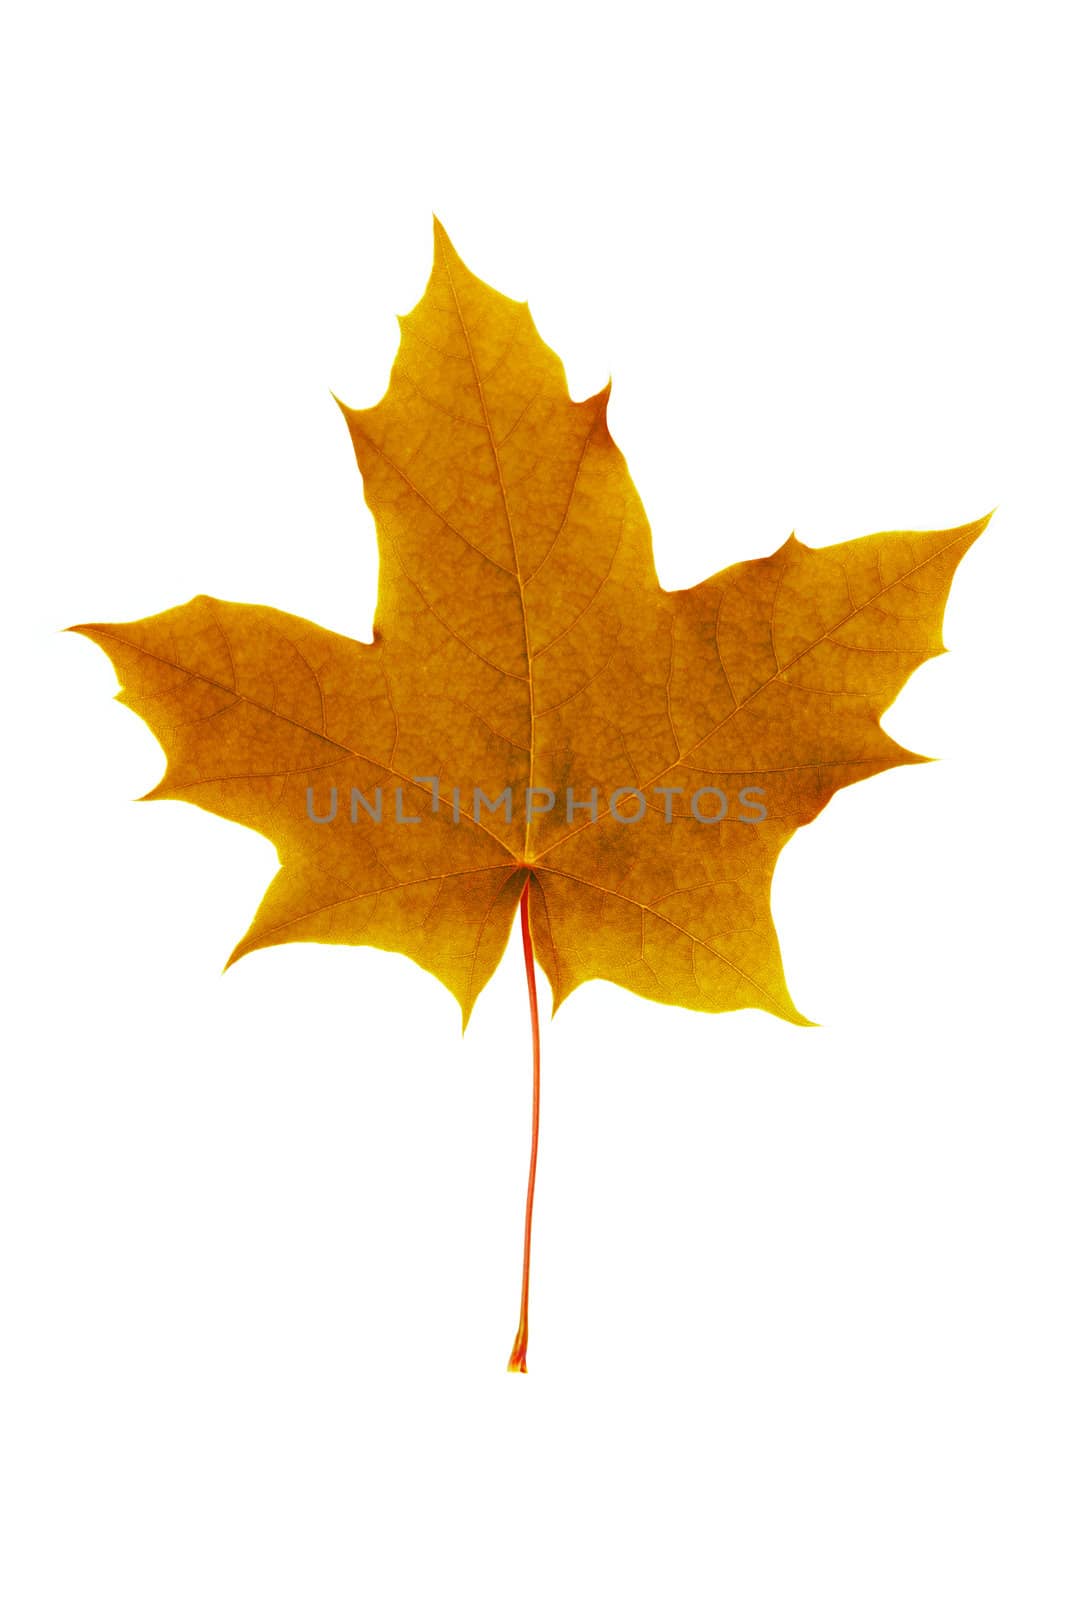 An image of bright orange maple leaf